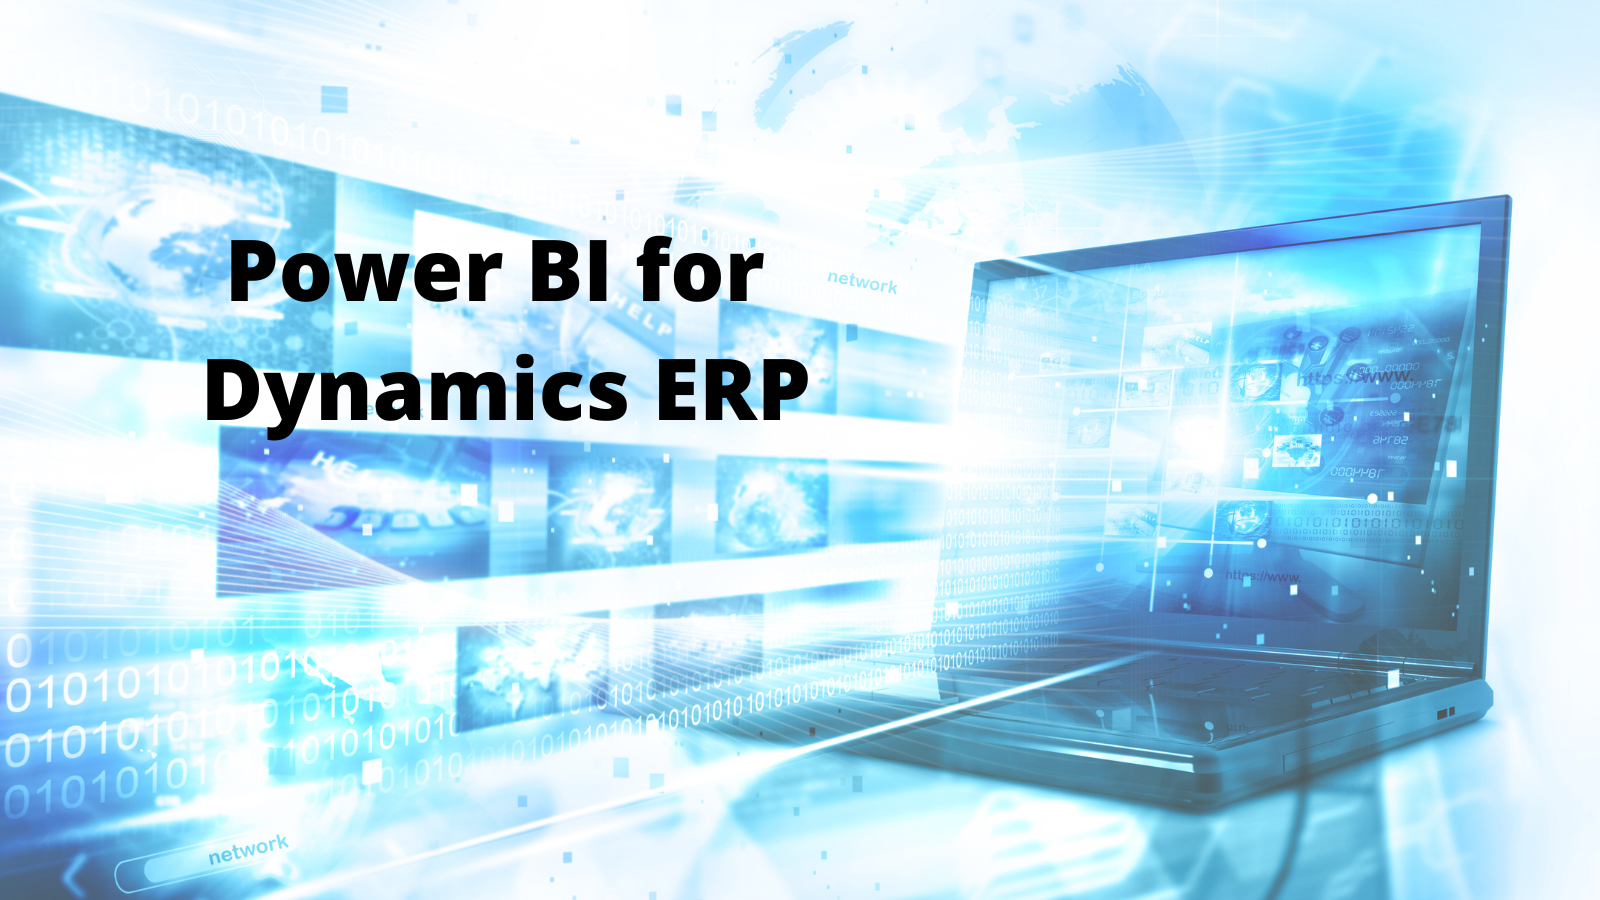 Power BI for Dynamics ERP